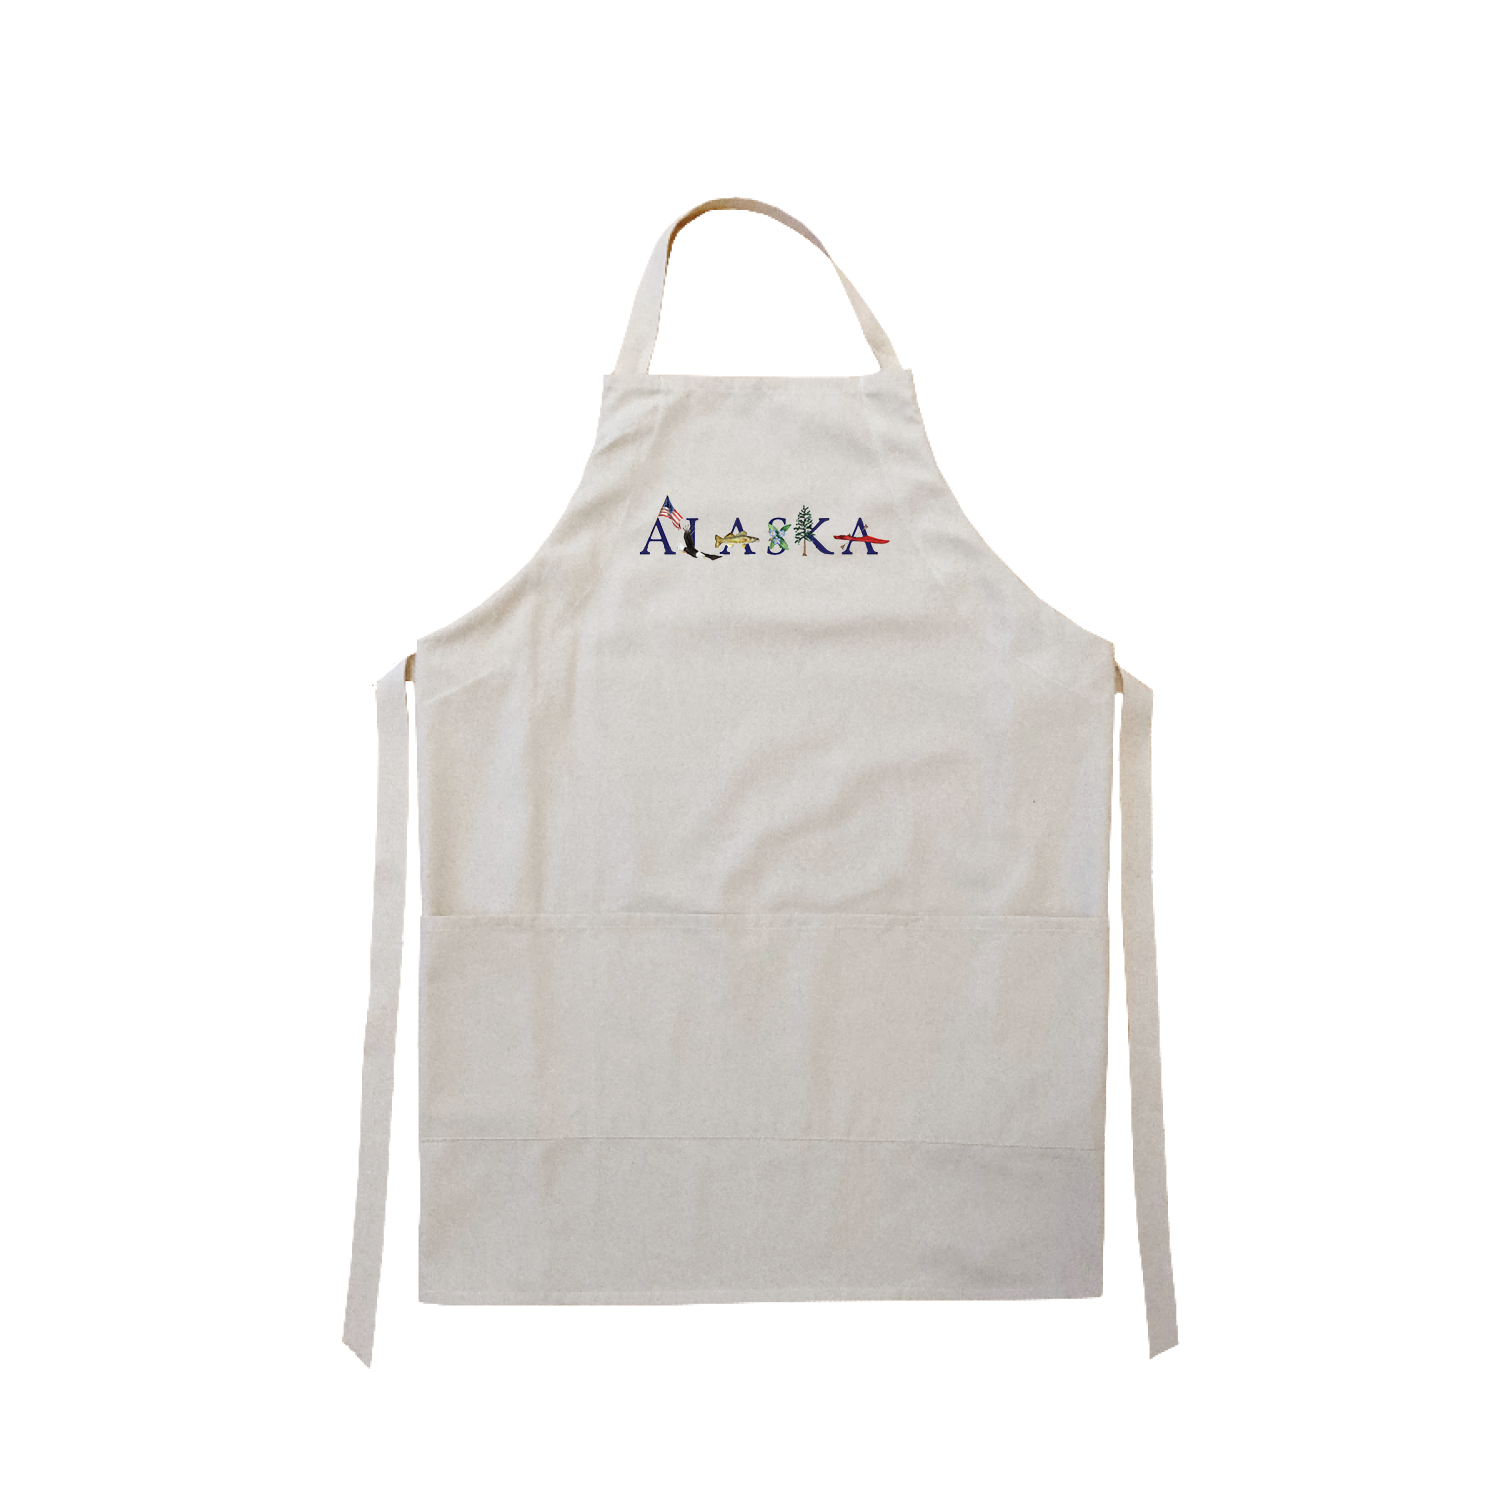 Alaska apron